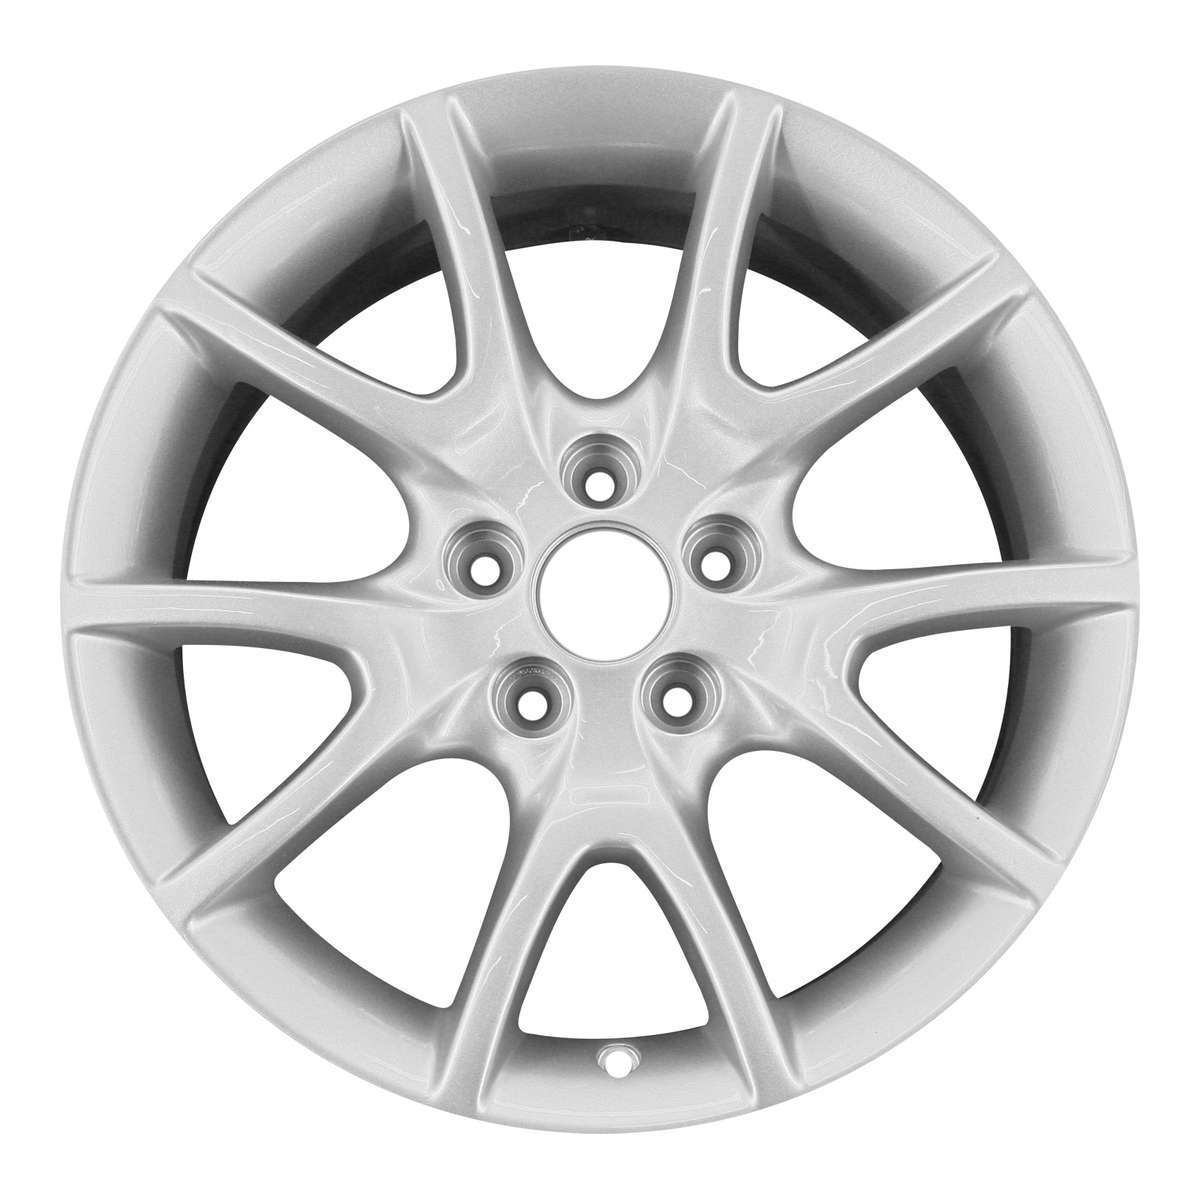 2015 Dodge Dart New 17" Replacement Wheel Rim RW2445S